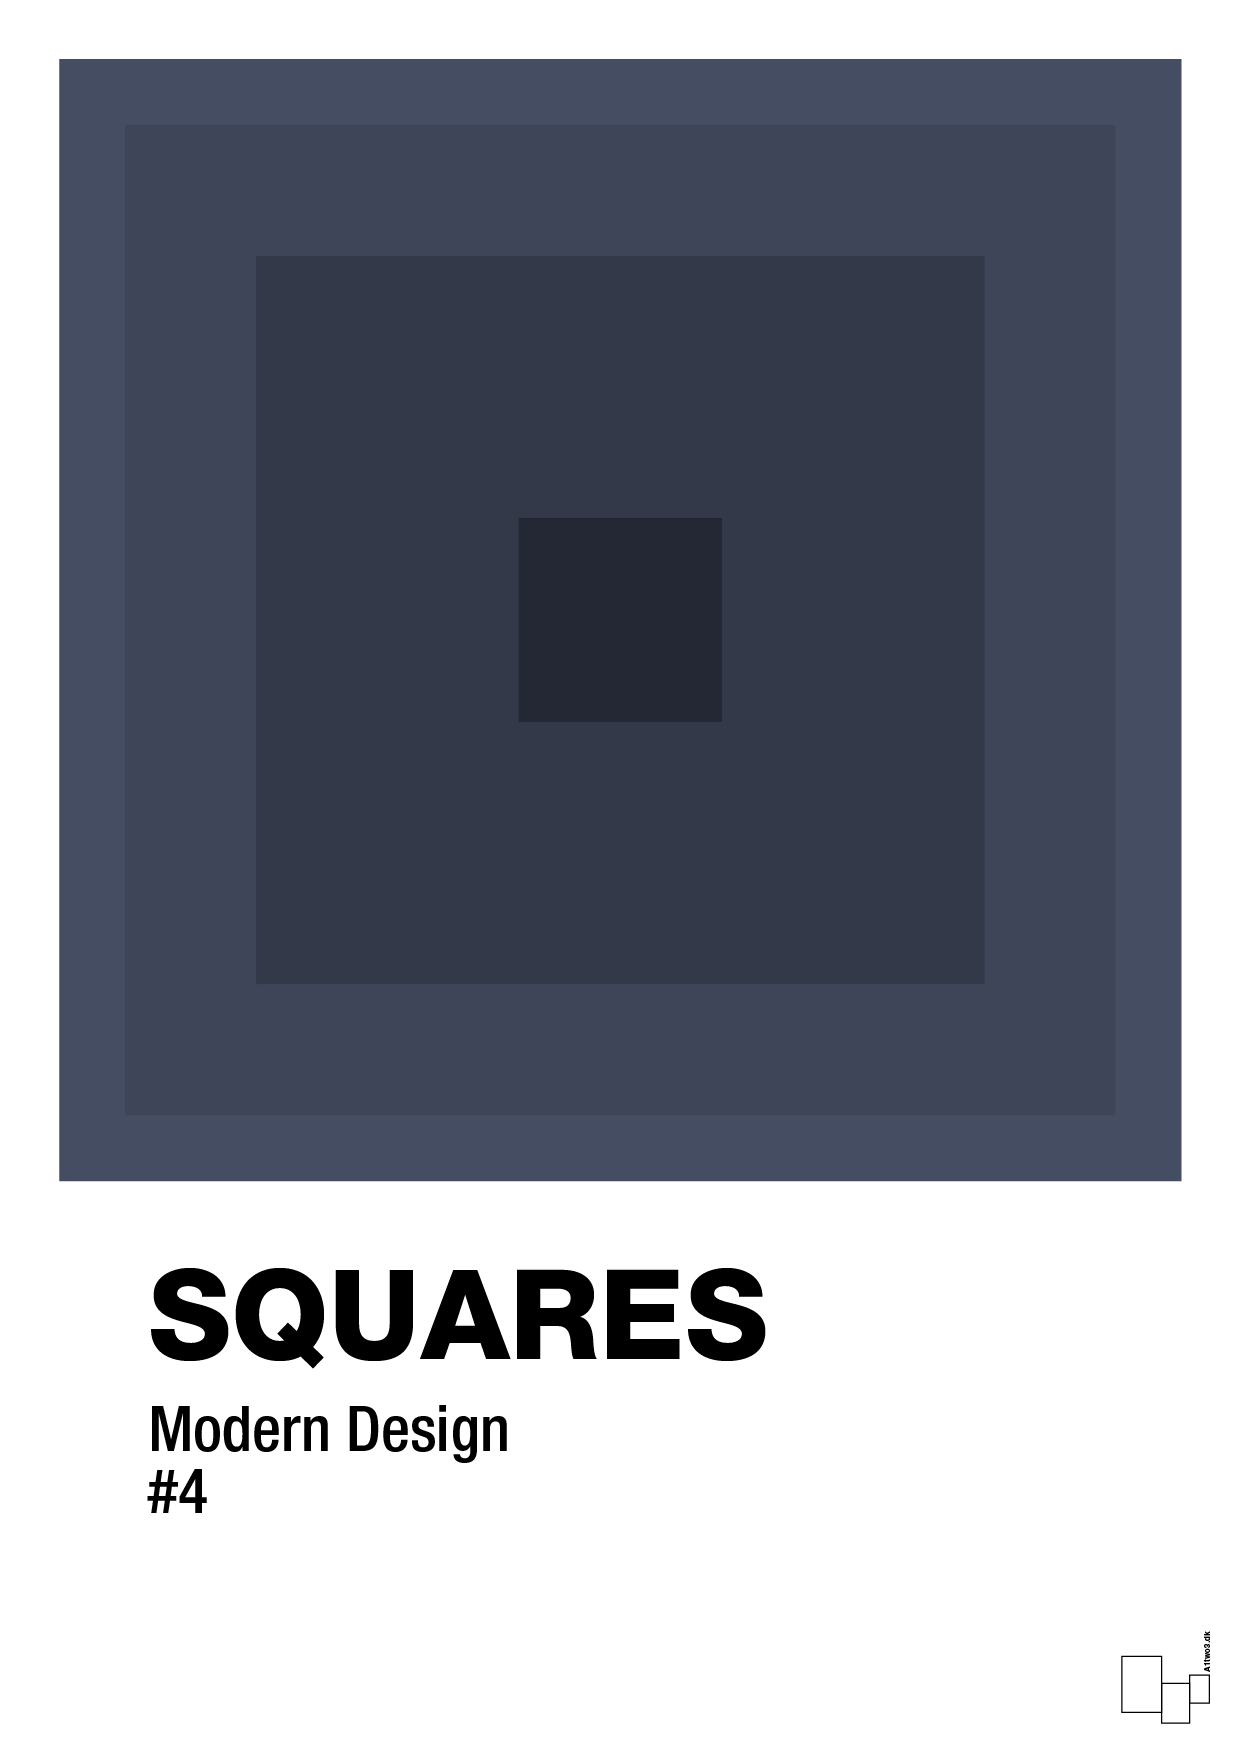 squares #4 - Plakat med Grafik i Petrol